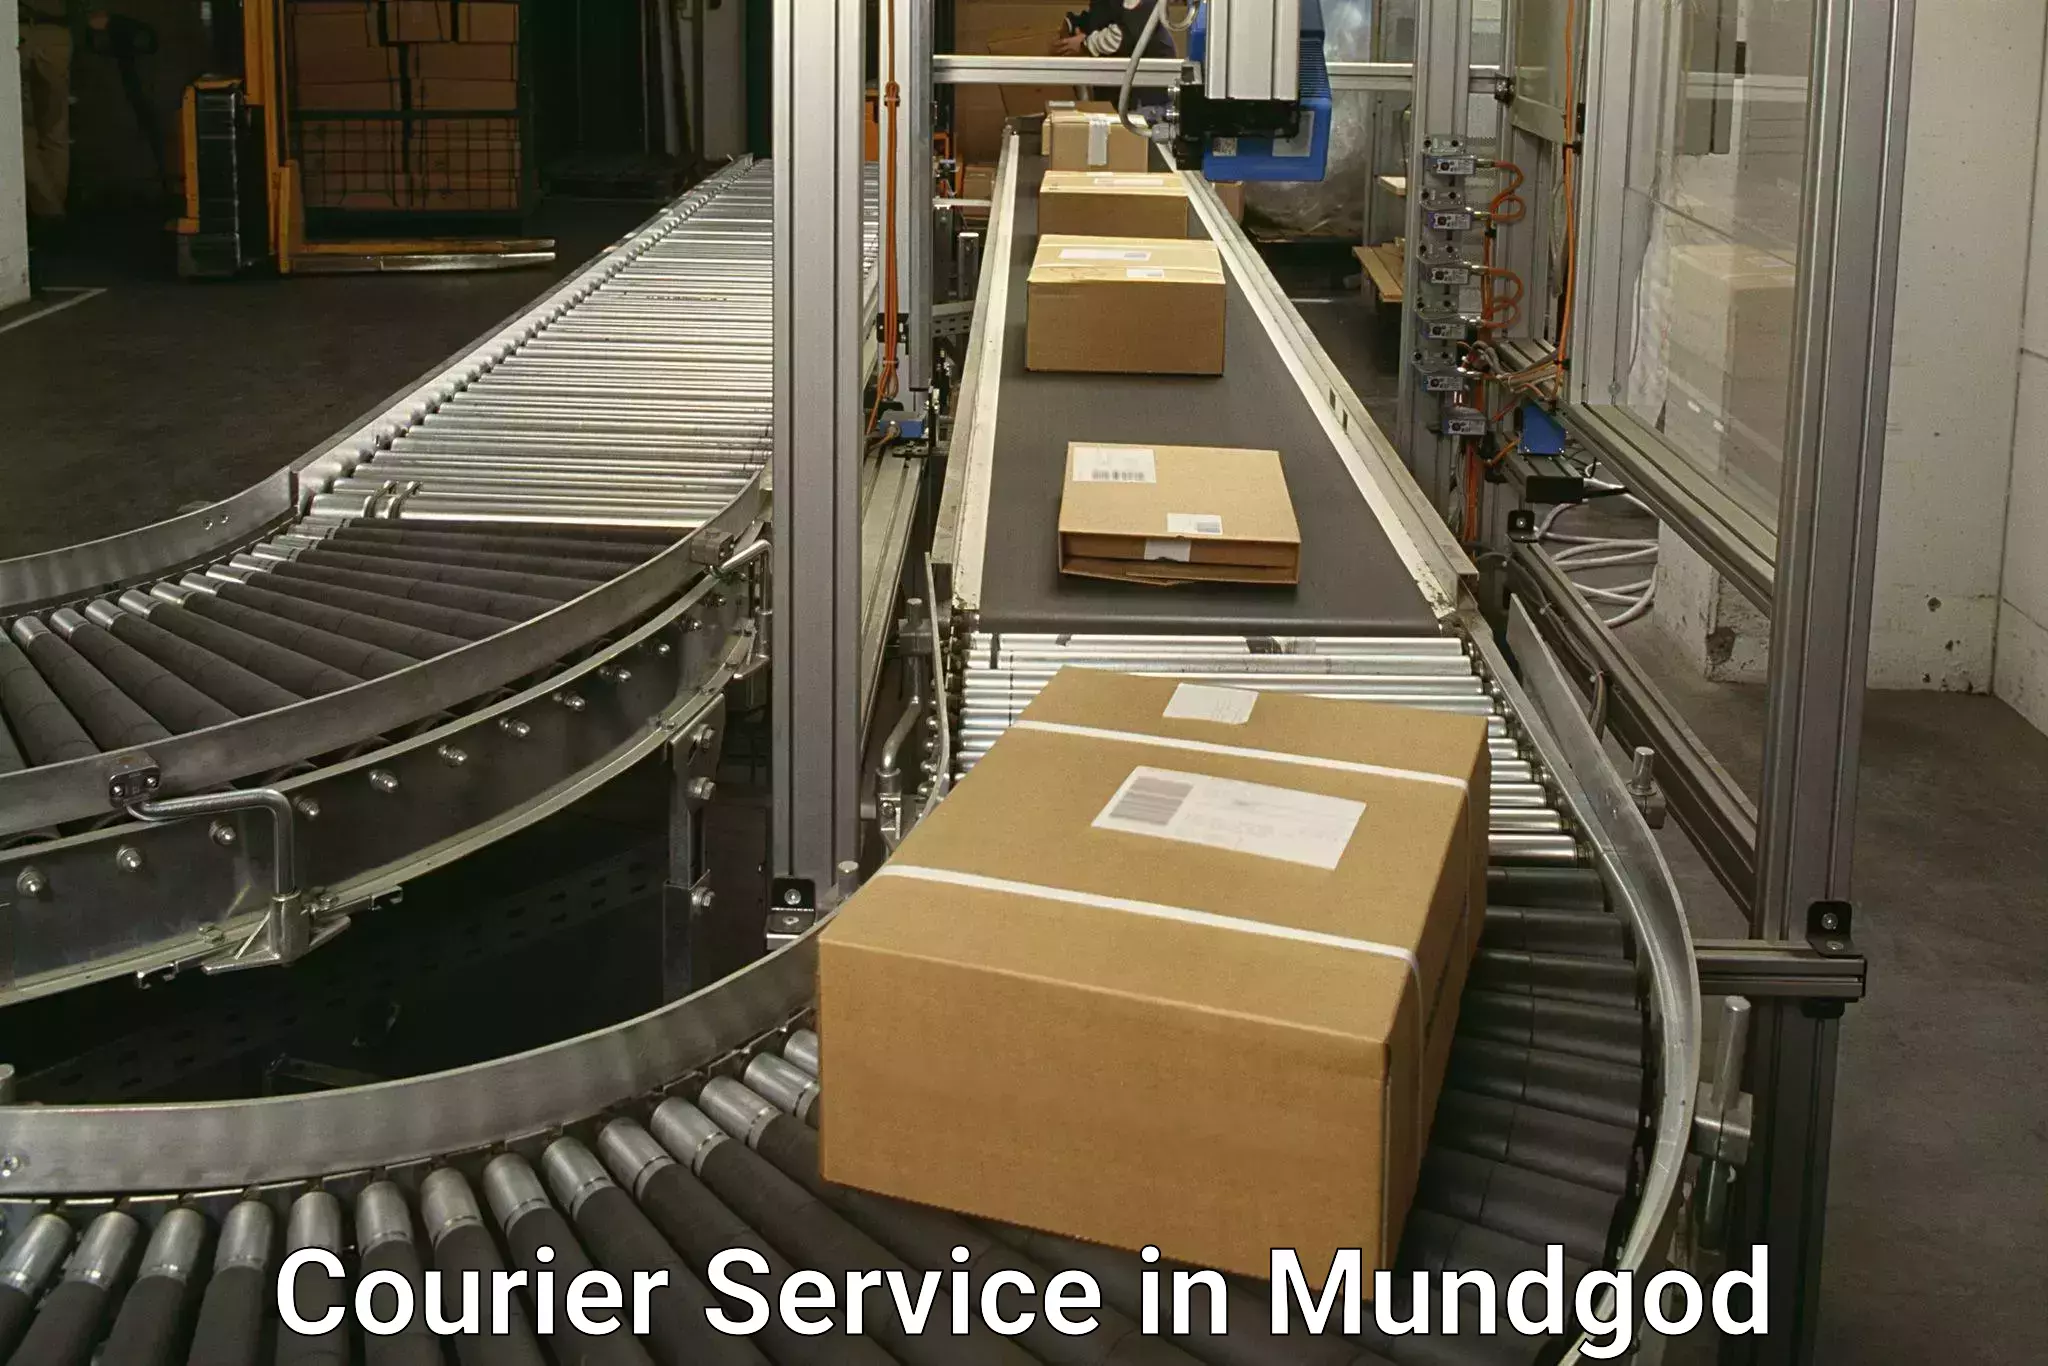 Multi-modal transport in Mundgod